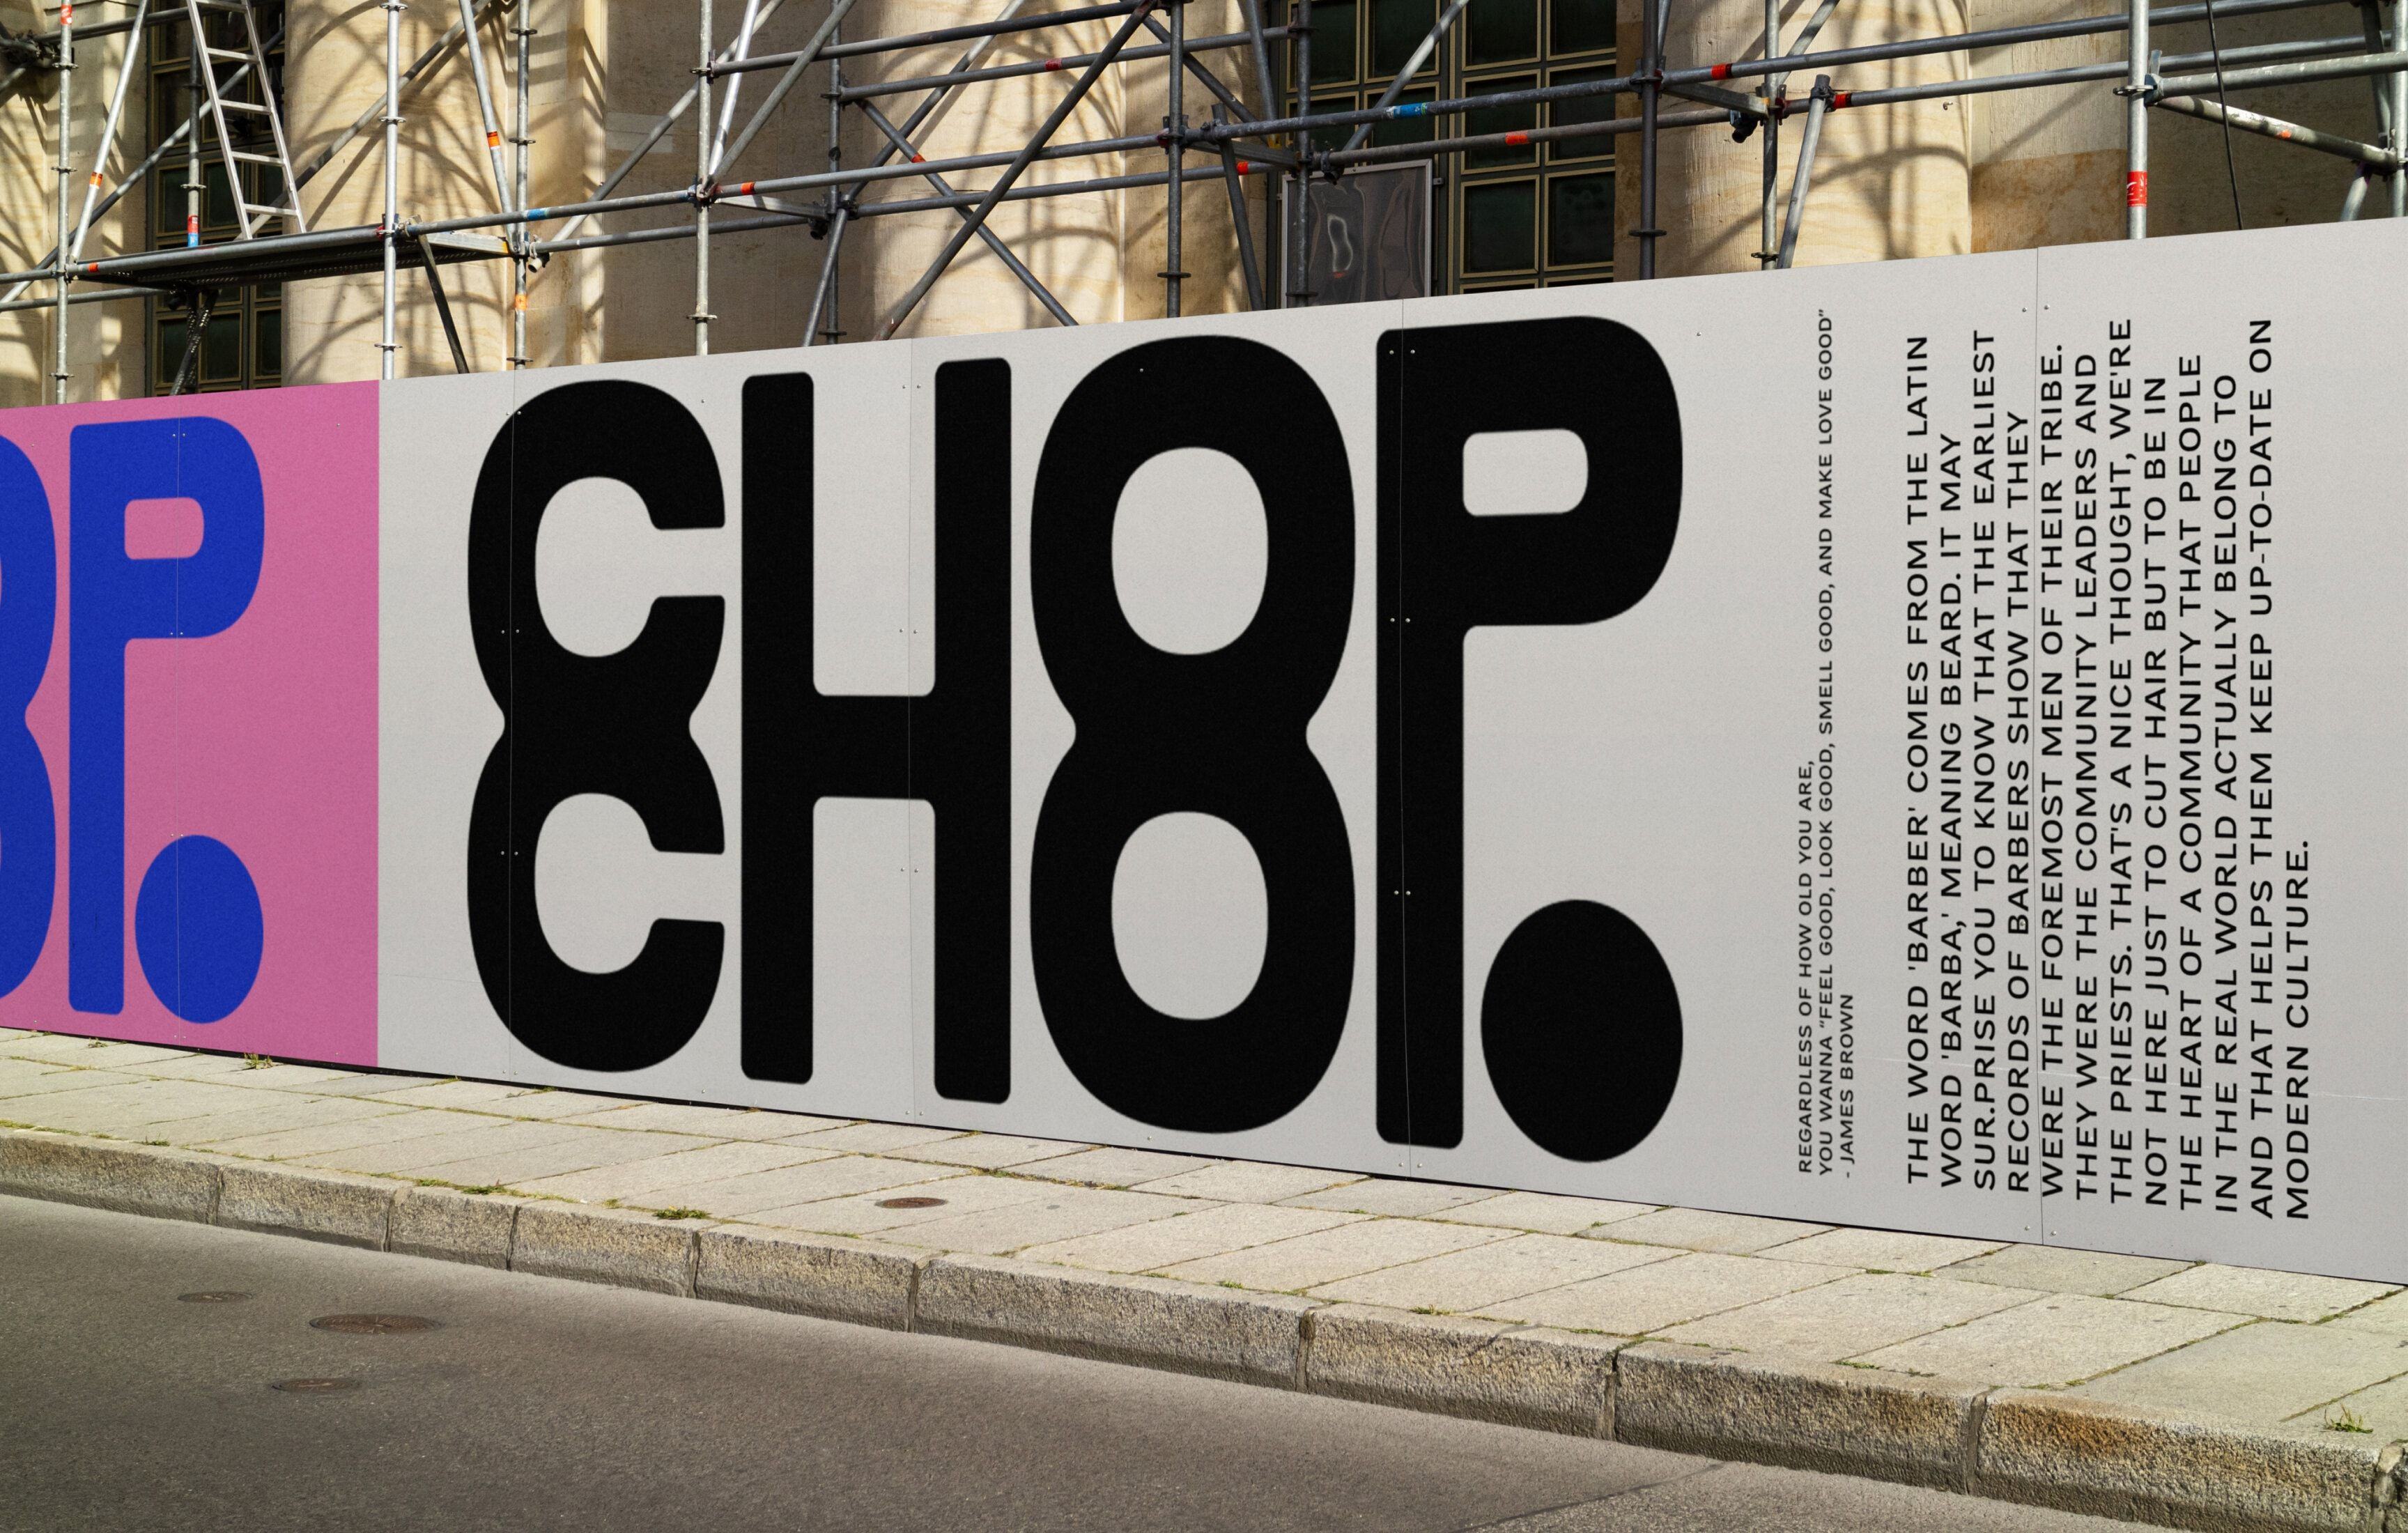 Chop Chop advertisement